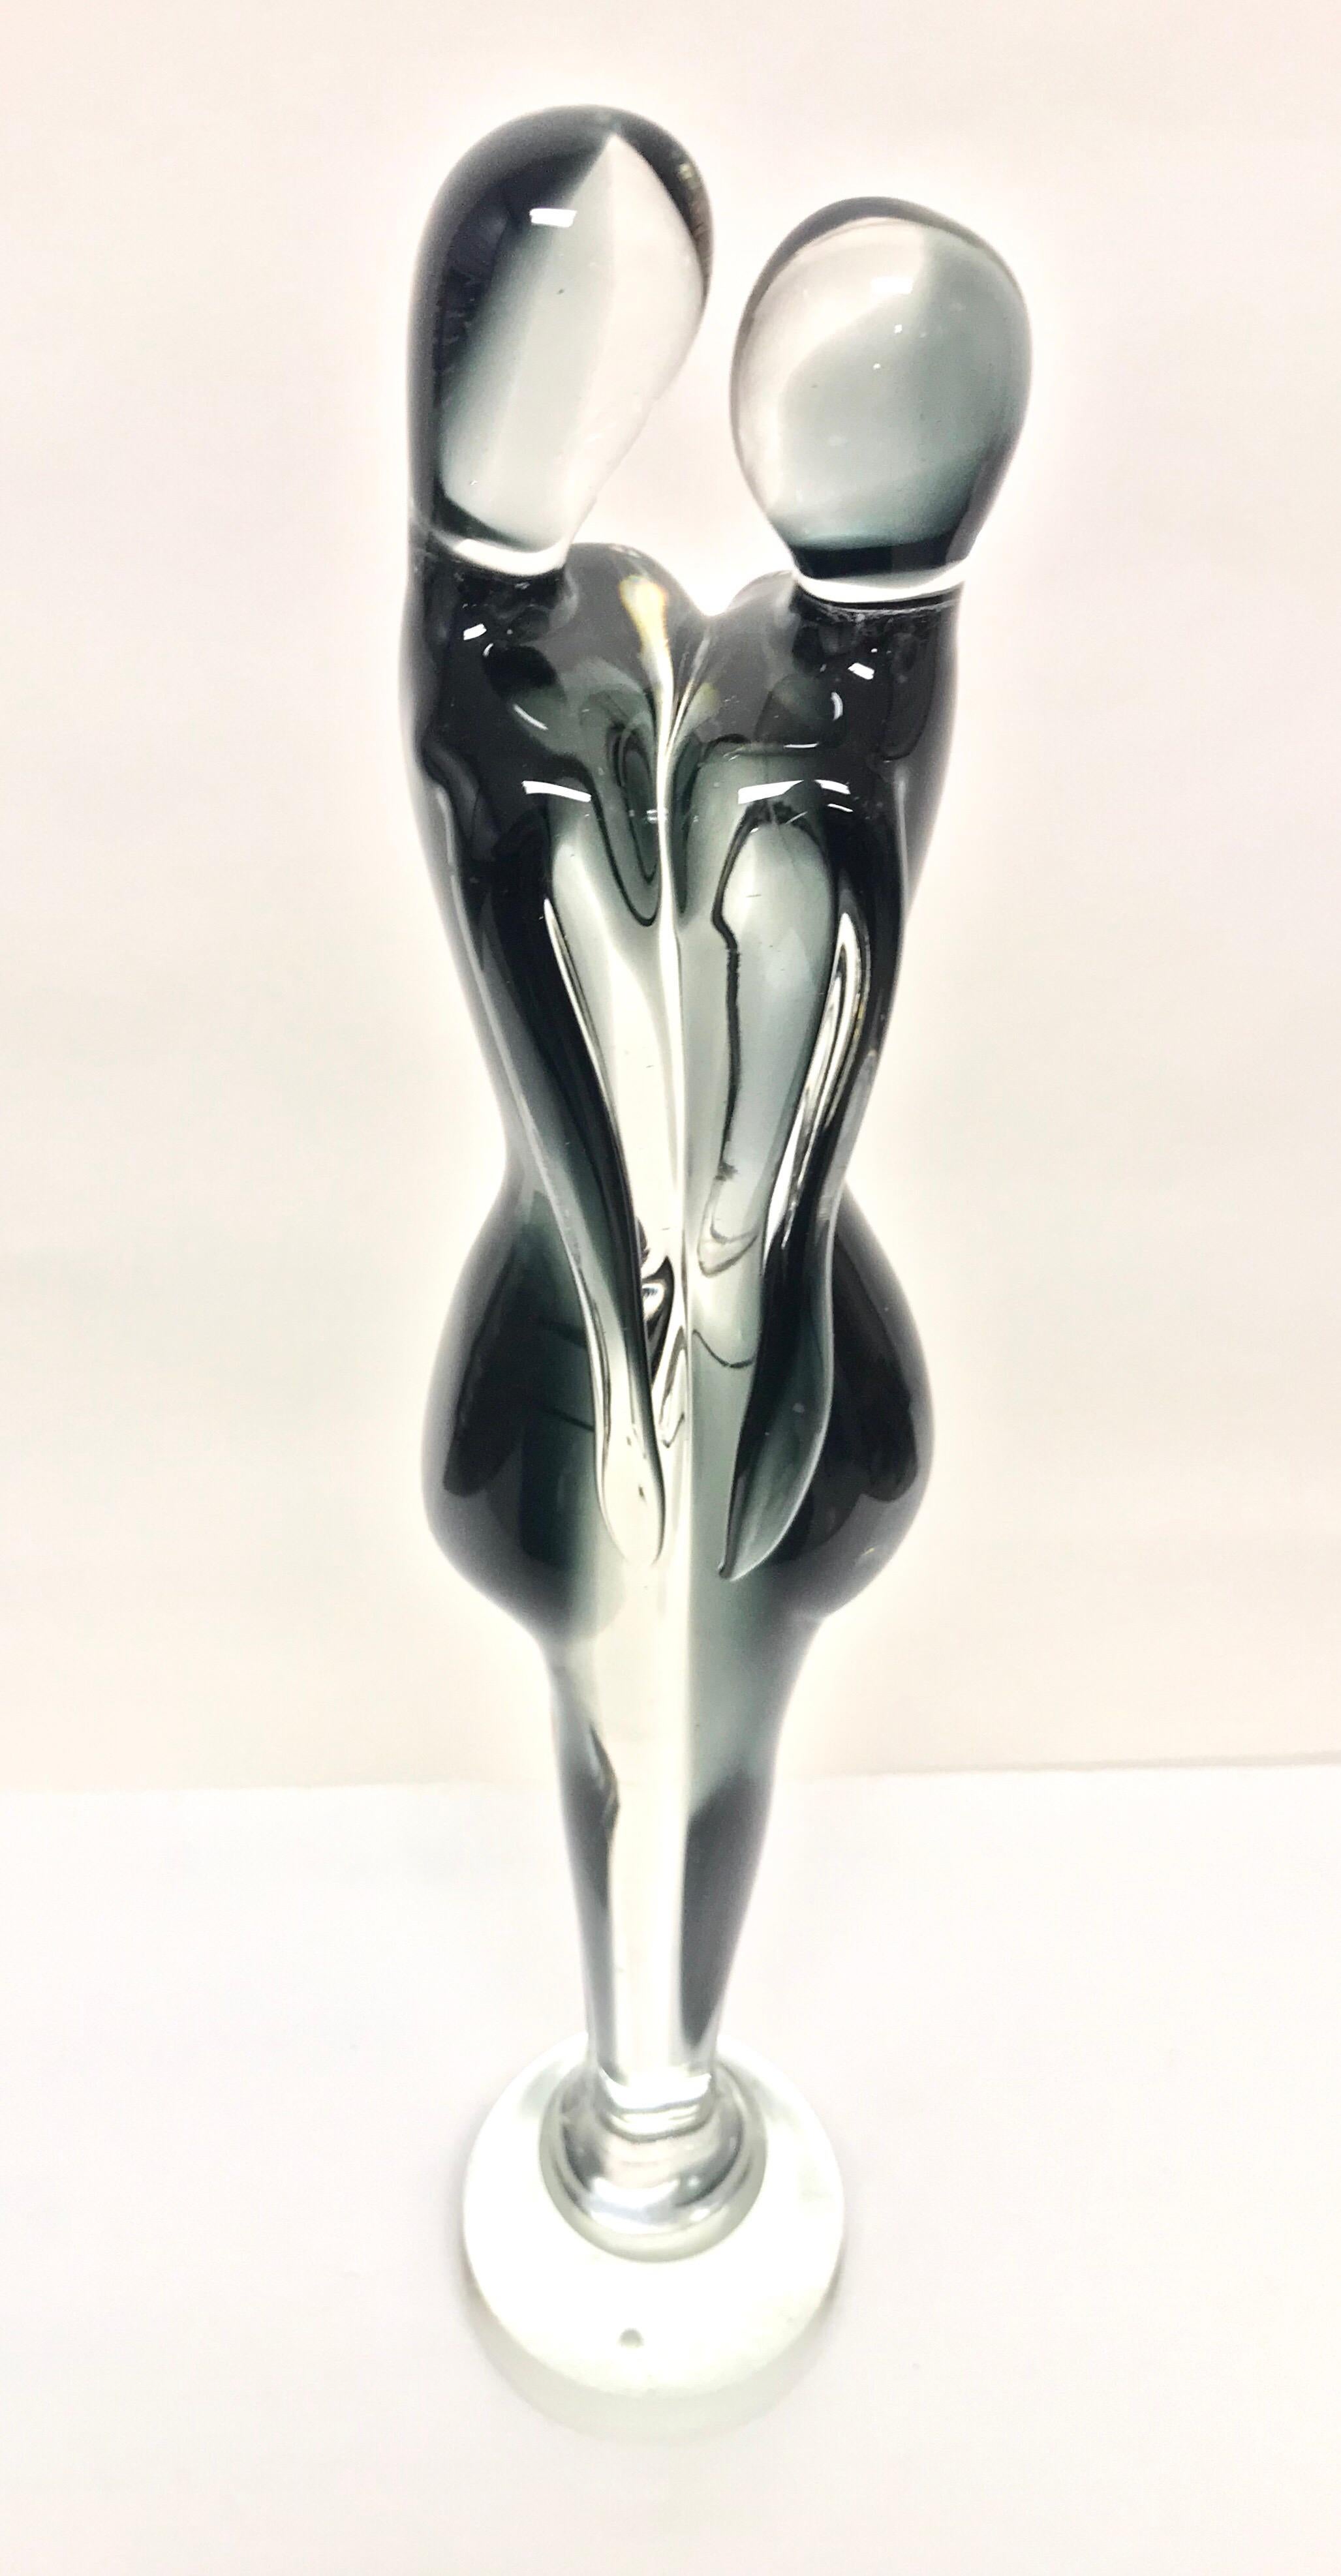 Late 20th Century Murano Glass Sculpture Attributed to Pino Signoretto For Sale